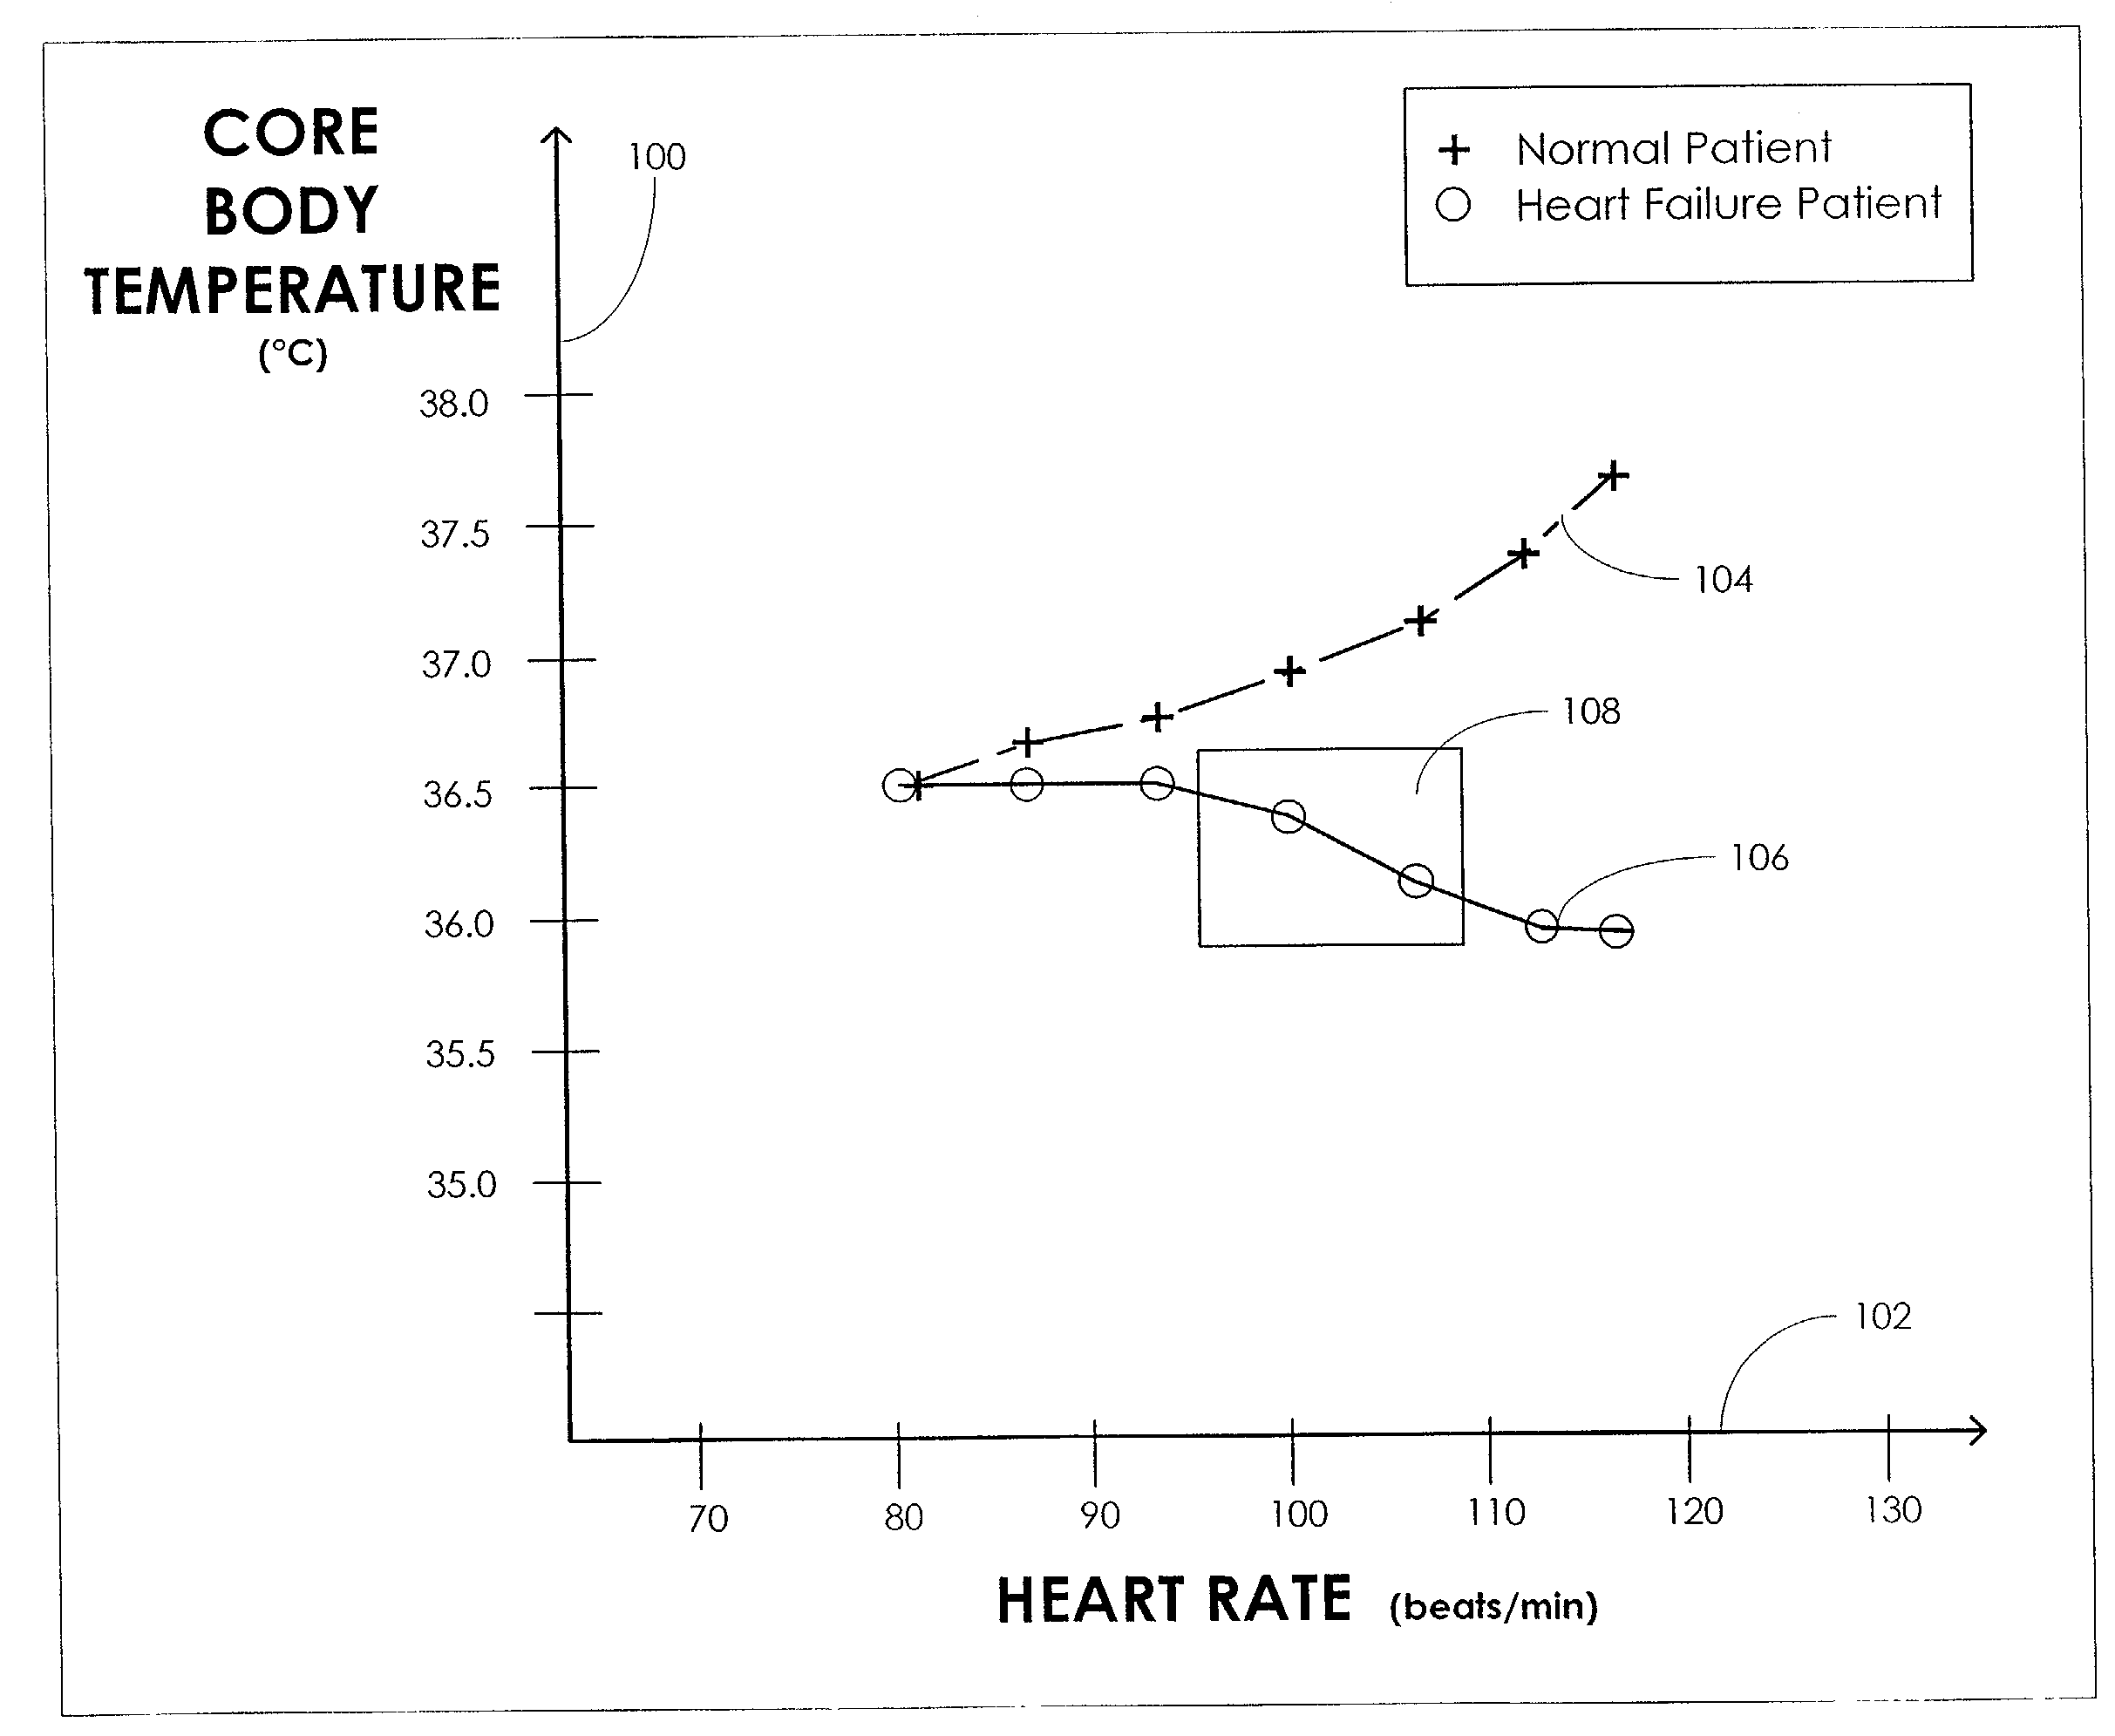 Core body temperature monitoring in heart failure patients